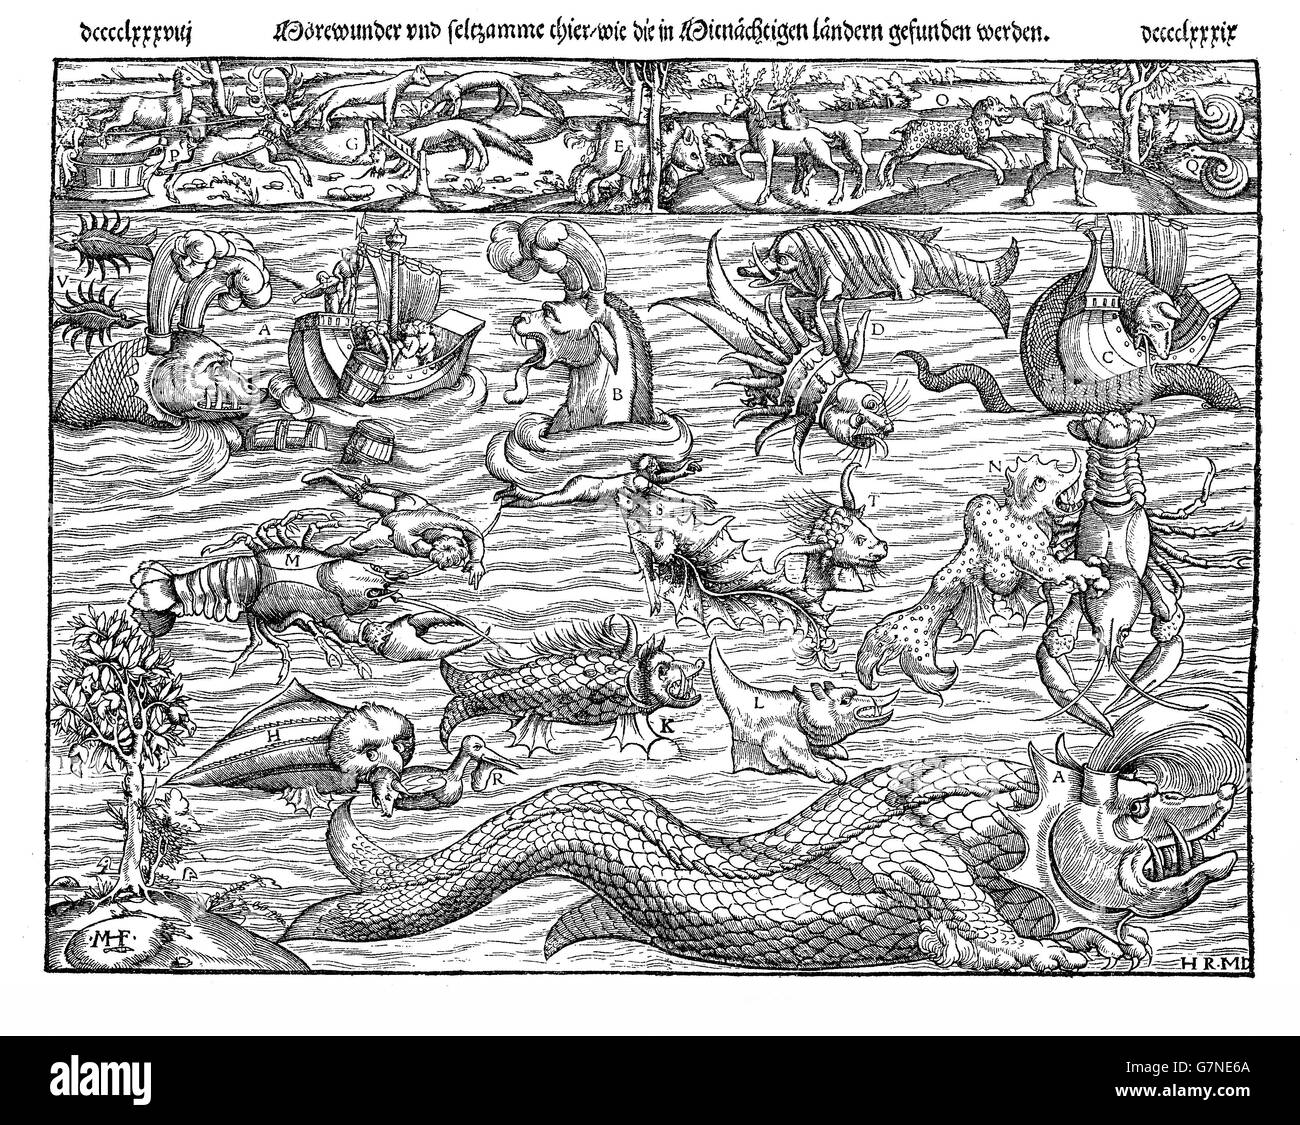 1550 ca., l'âge moyen description illustrée de monstres marins de nombreuses formes, y compris les dragons et serpents de mer mer Banque D'Images